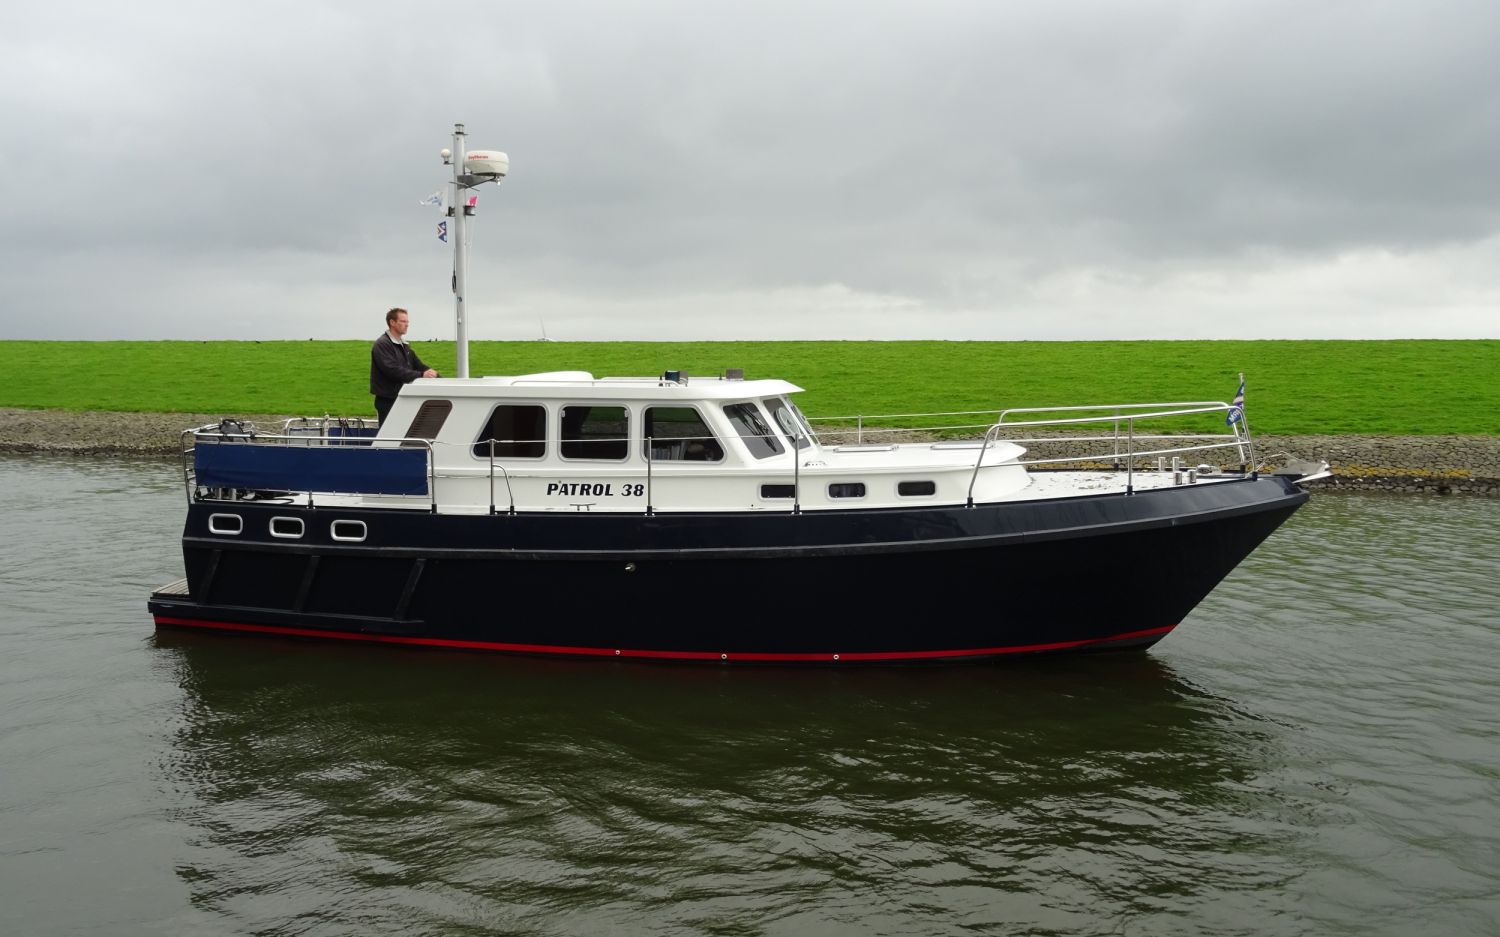 Patrol 38 Aluminium, Motor Yacht for sale by HollandBoat International Yachtbrokers